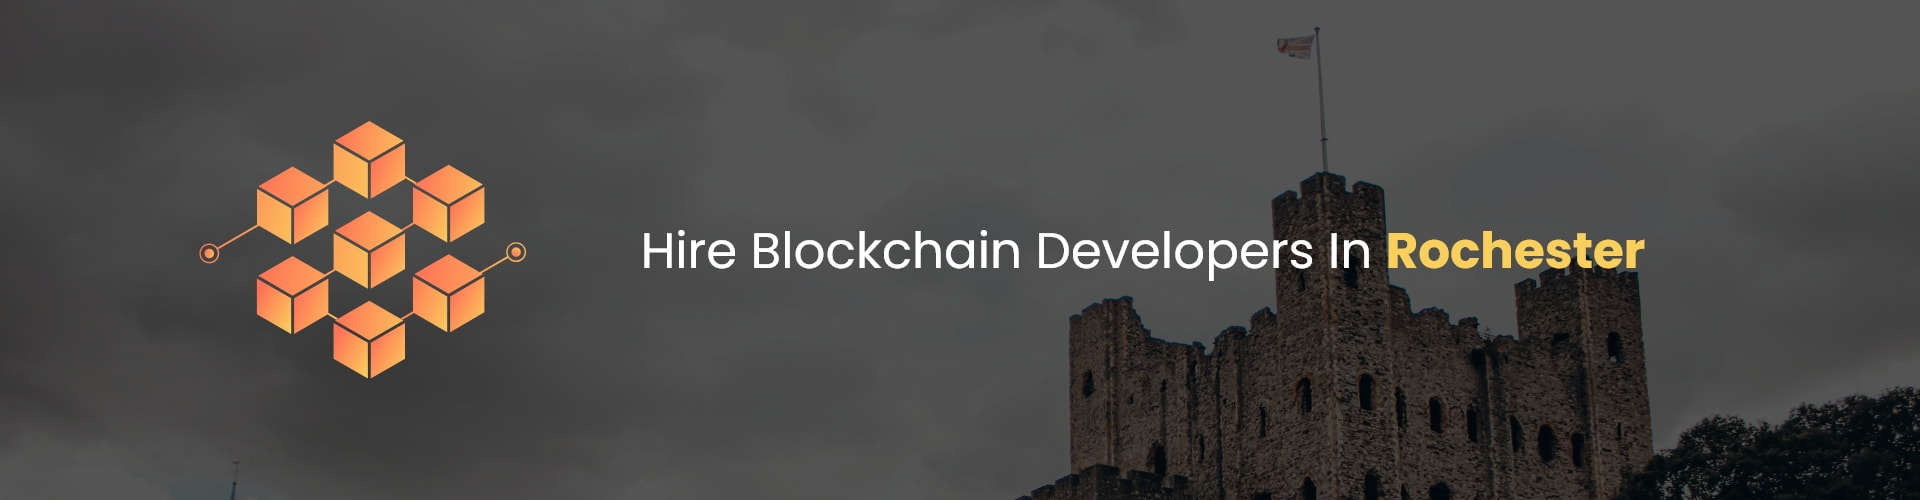 hire blockchain developers in rochester